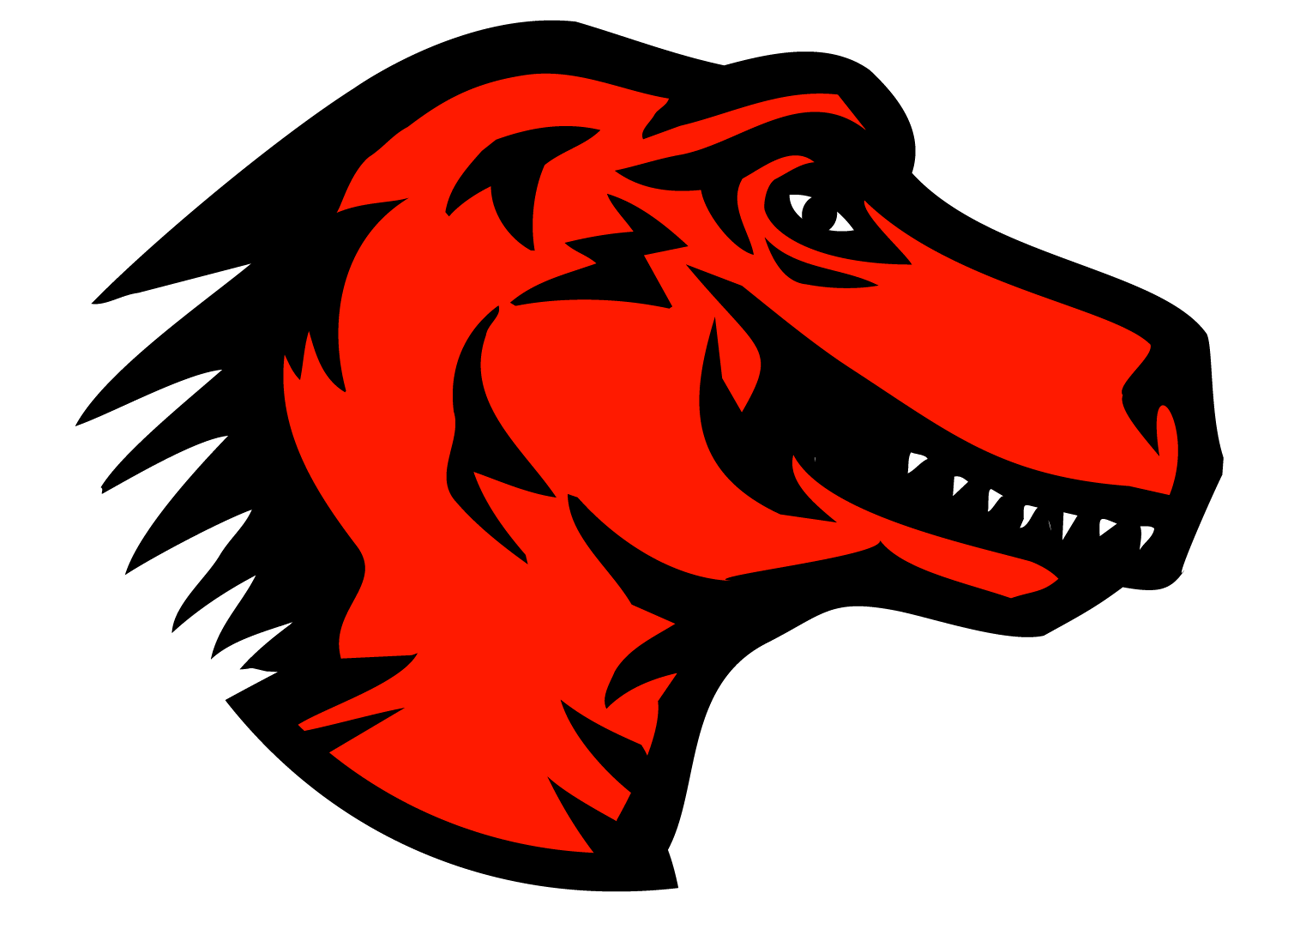 Dinosaur Office Logo - File:Mozilla dinosaur head logo.png - Wikimedia Commons